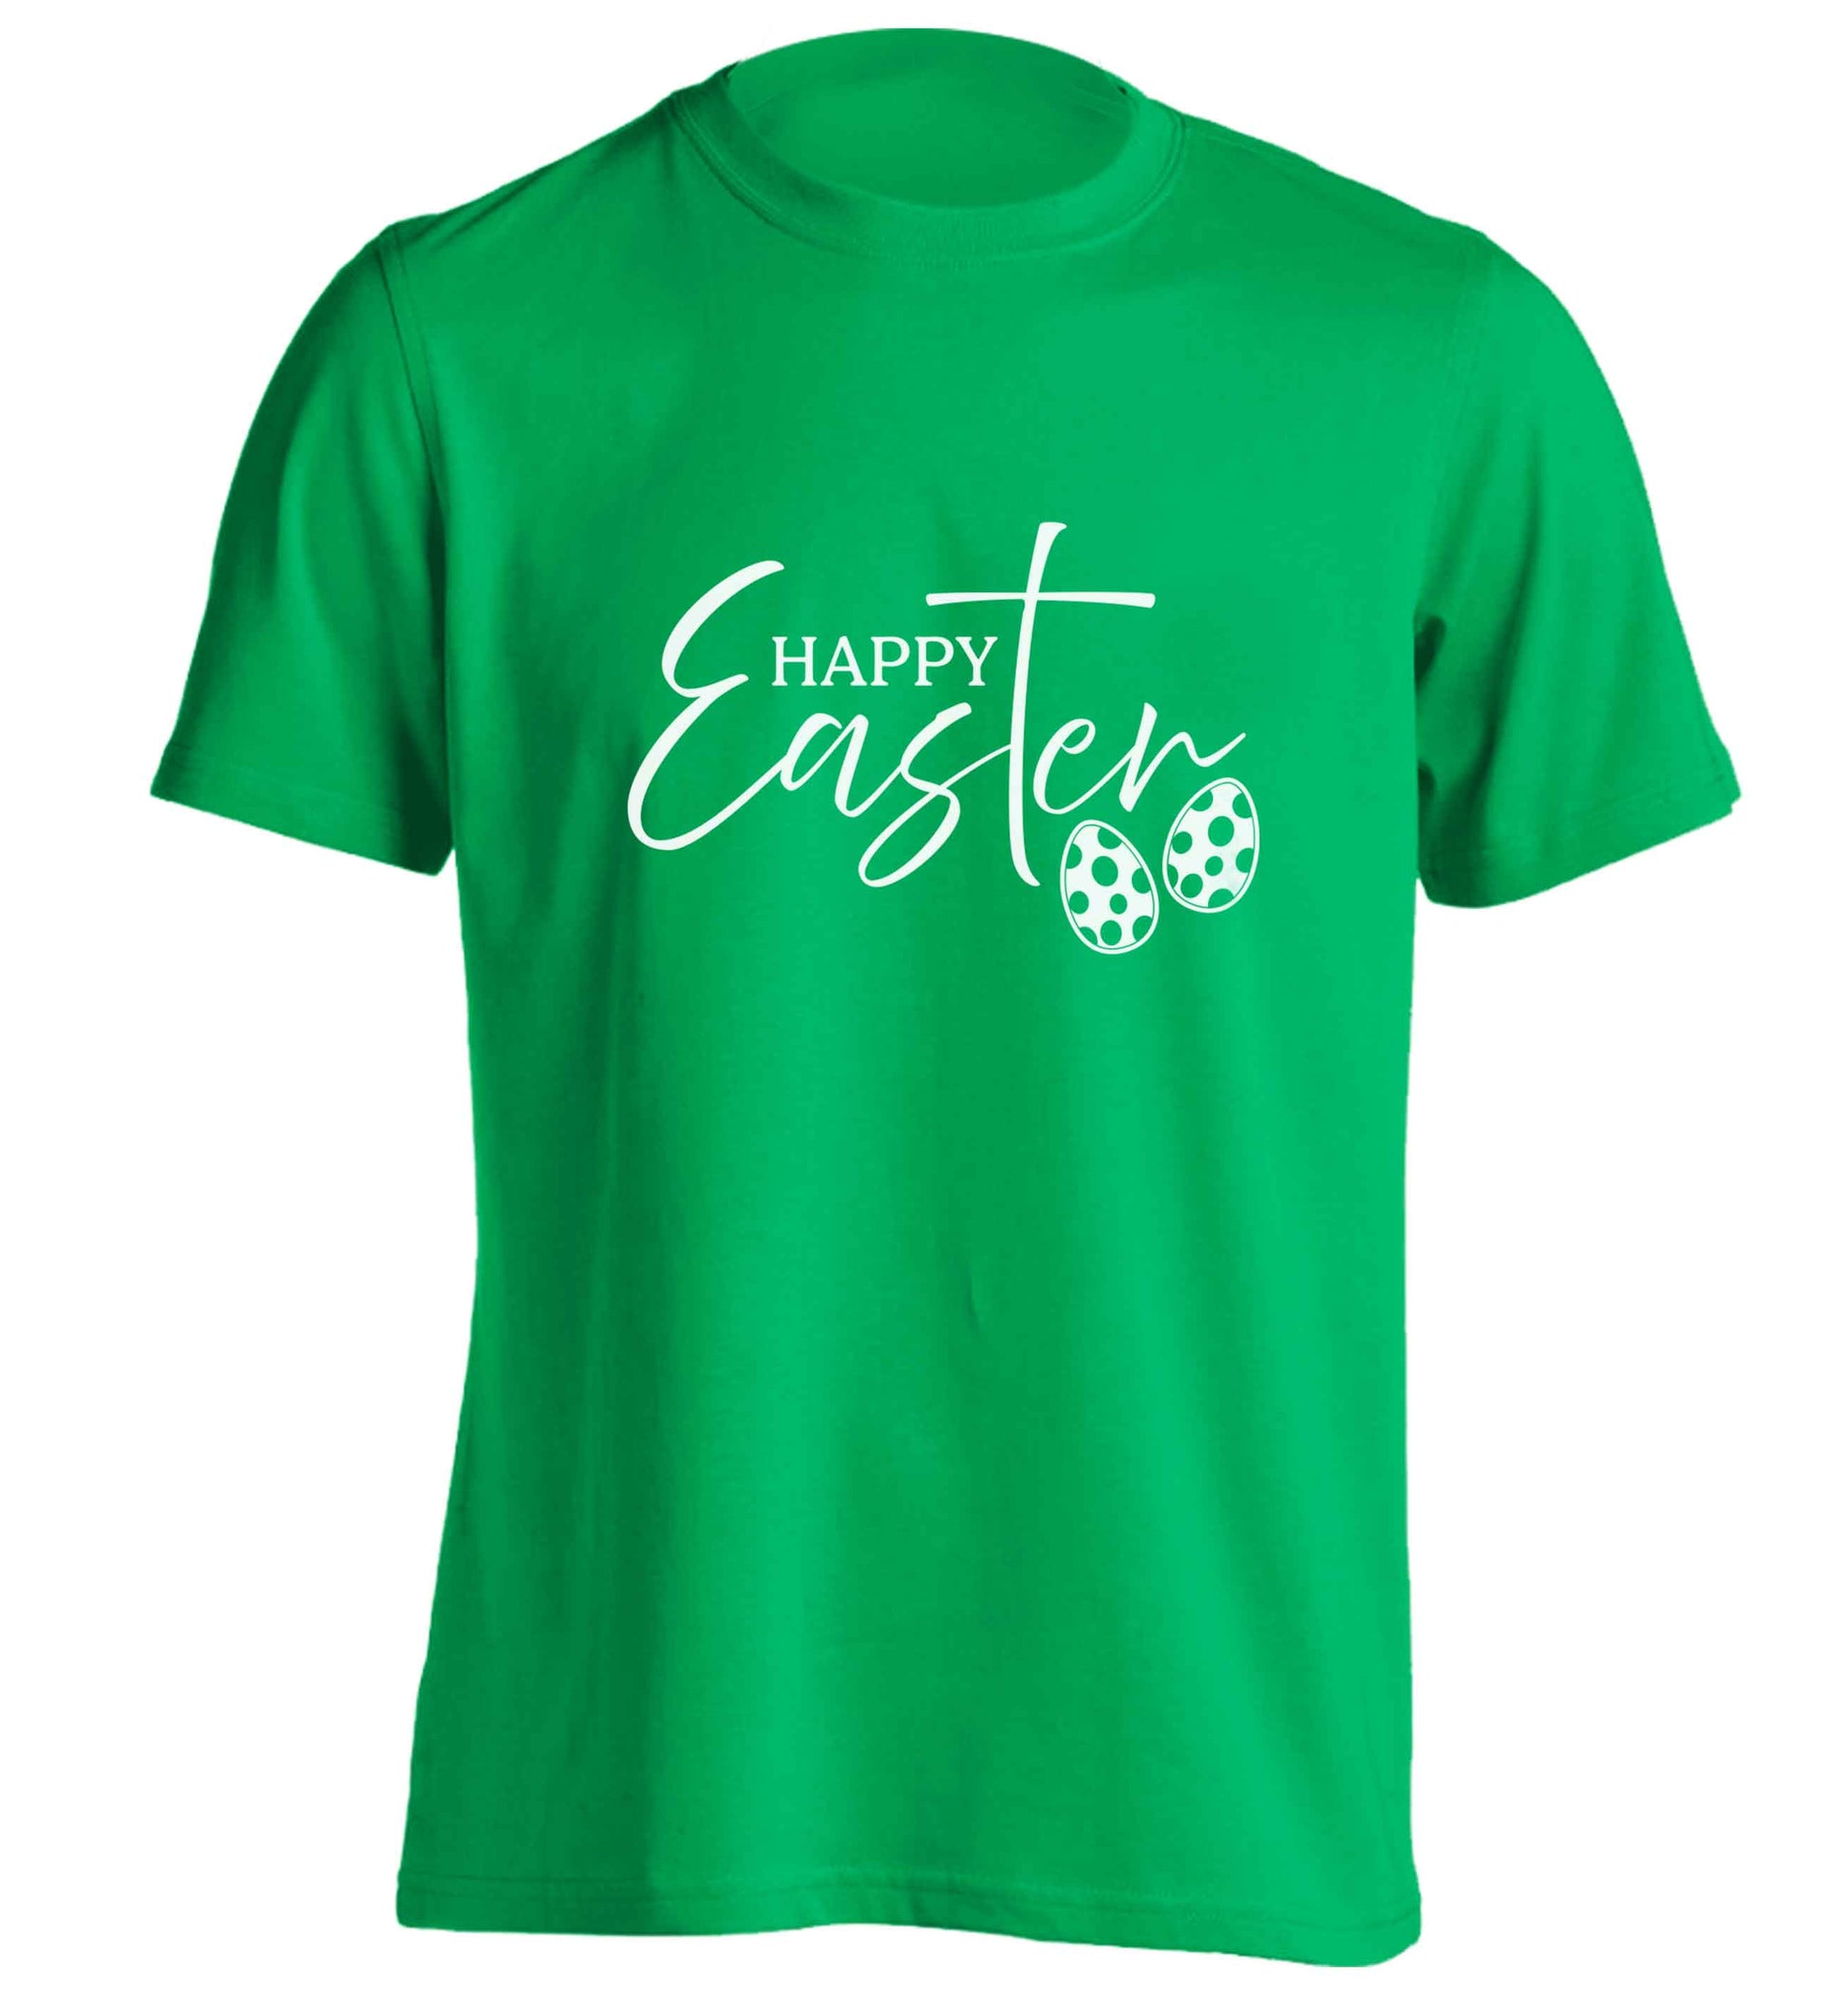 Happy Easter adults unisex green Tshirt 2XL